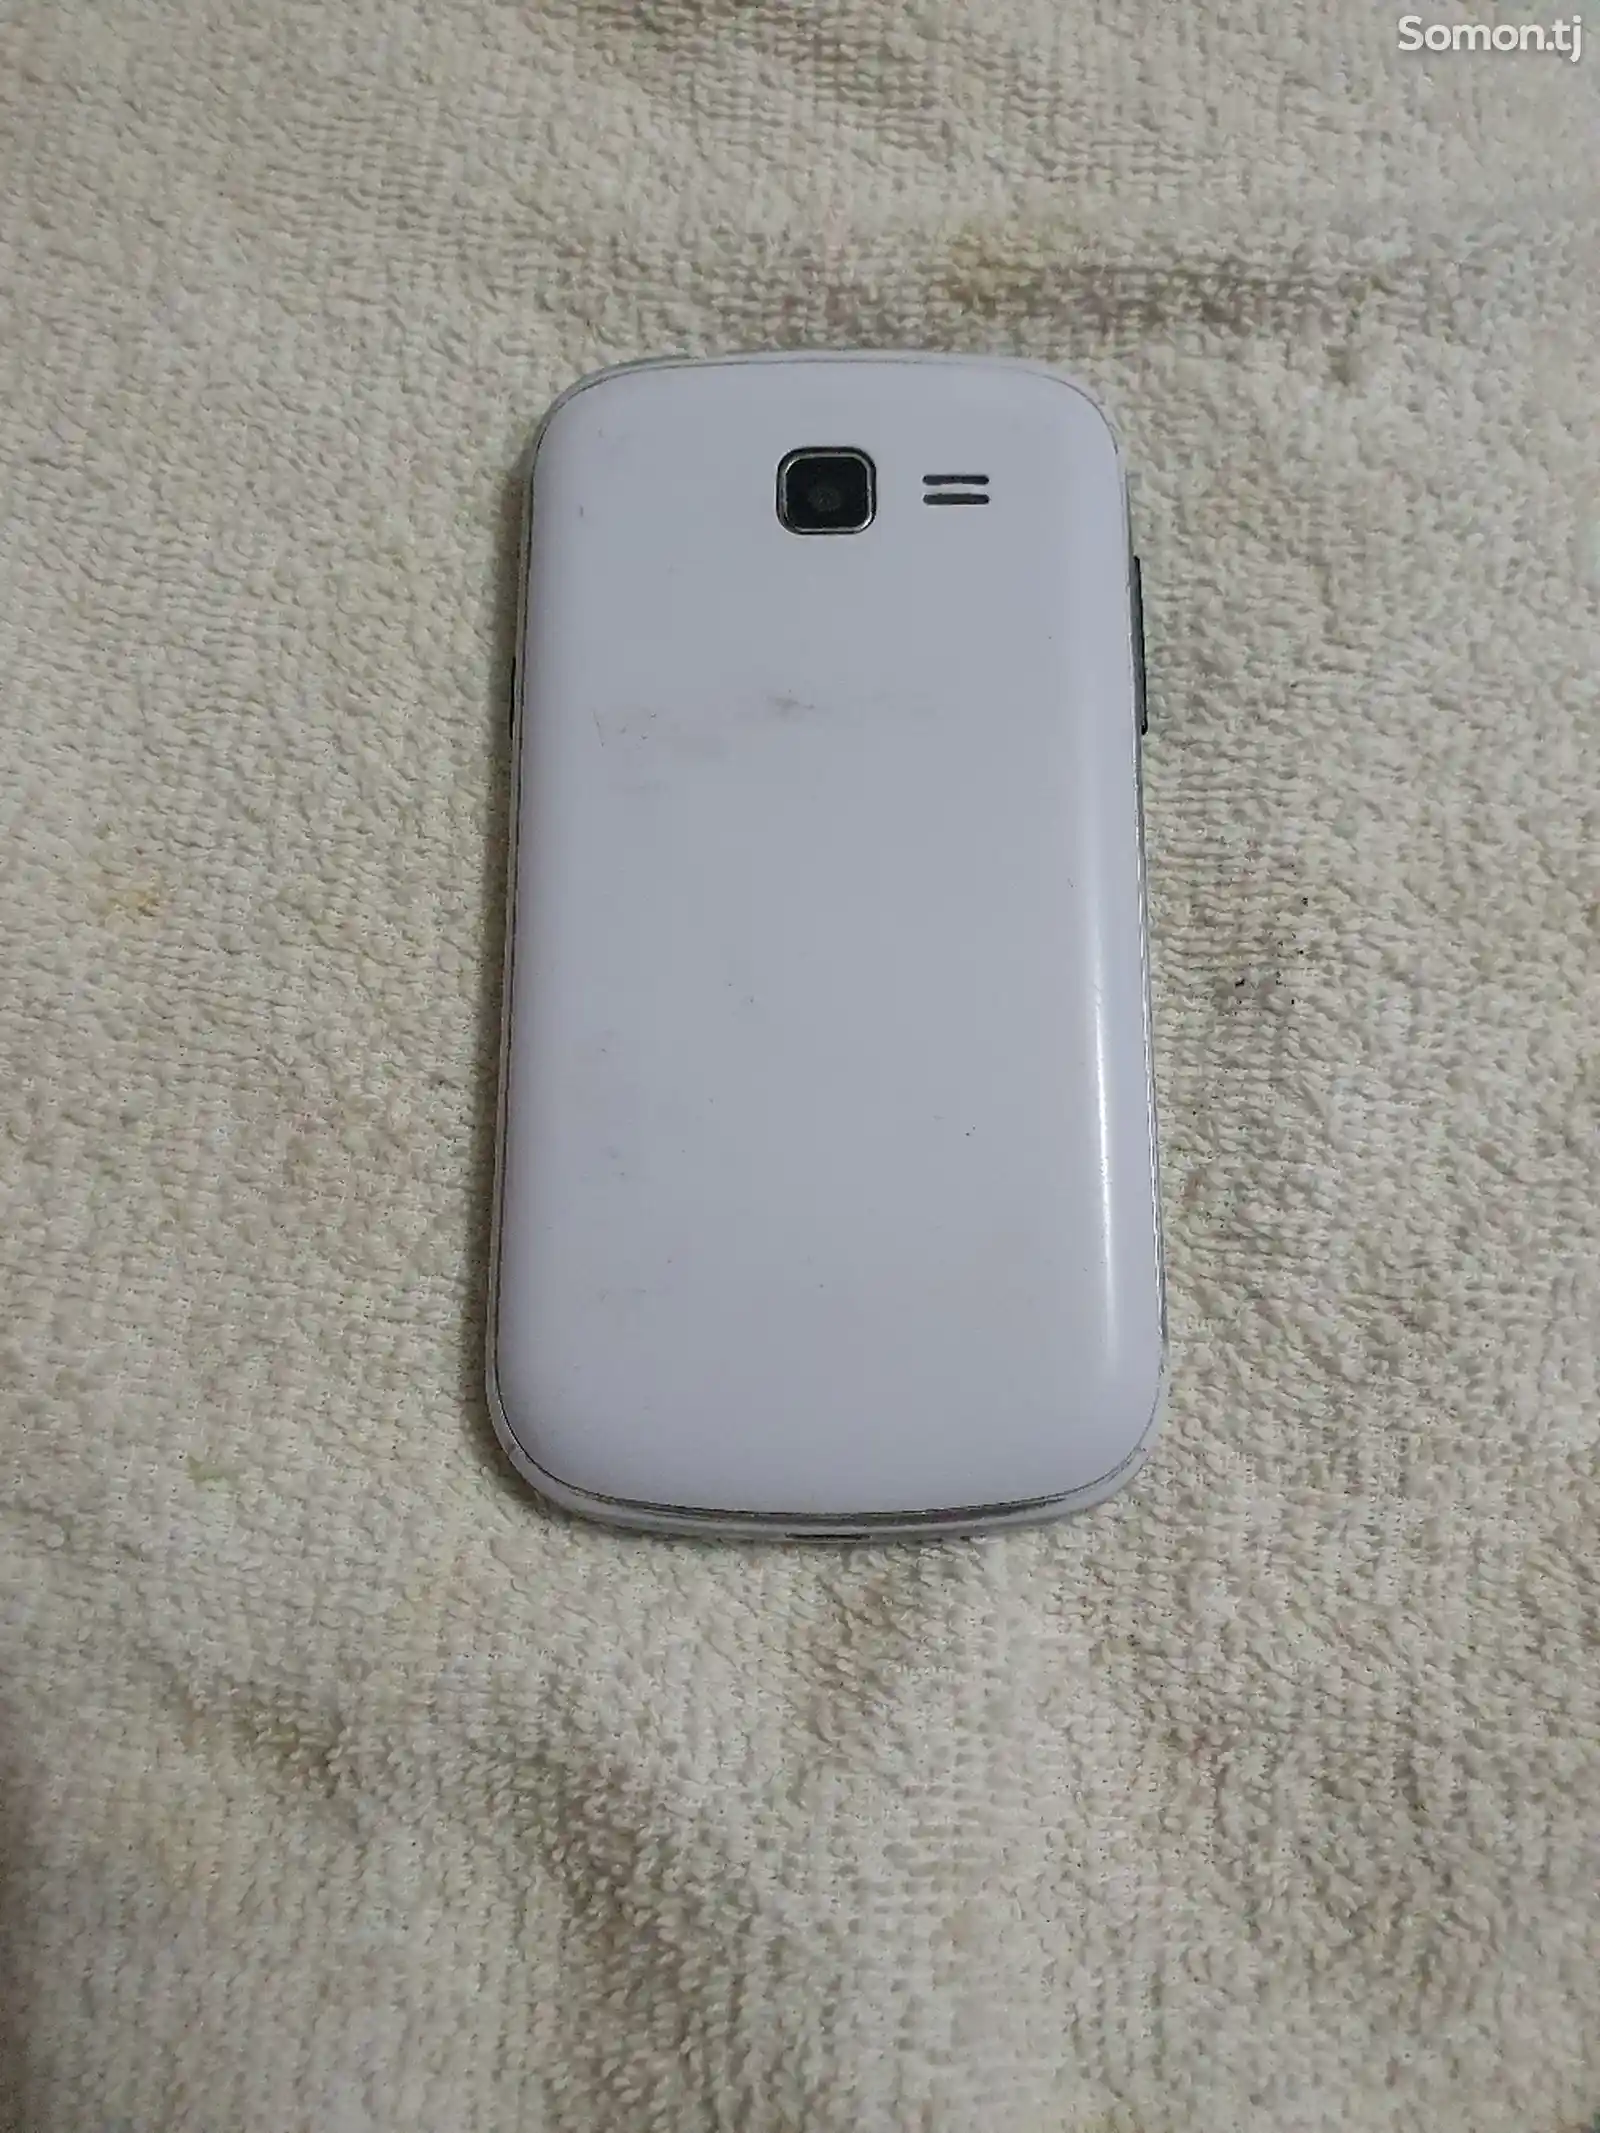 Samsung Galaxy 7390 Duos-6